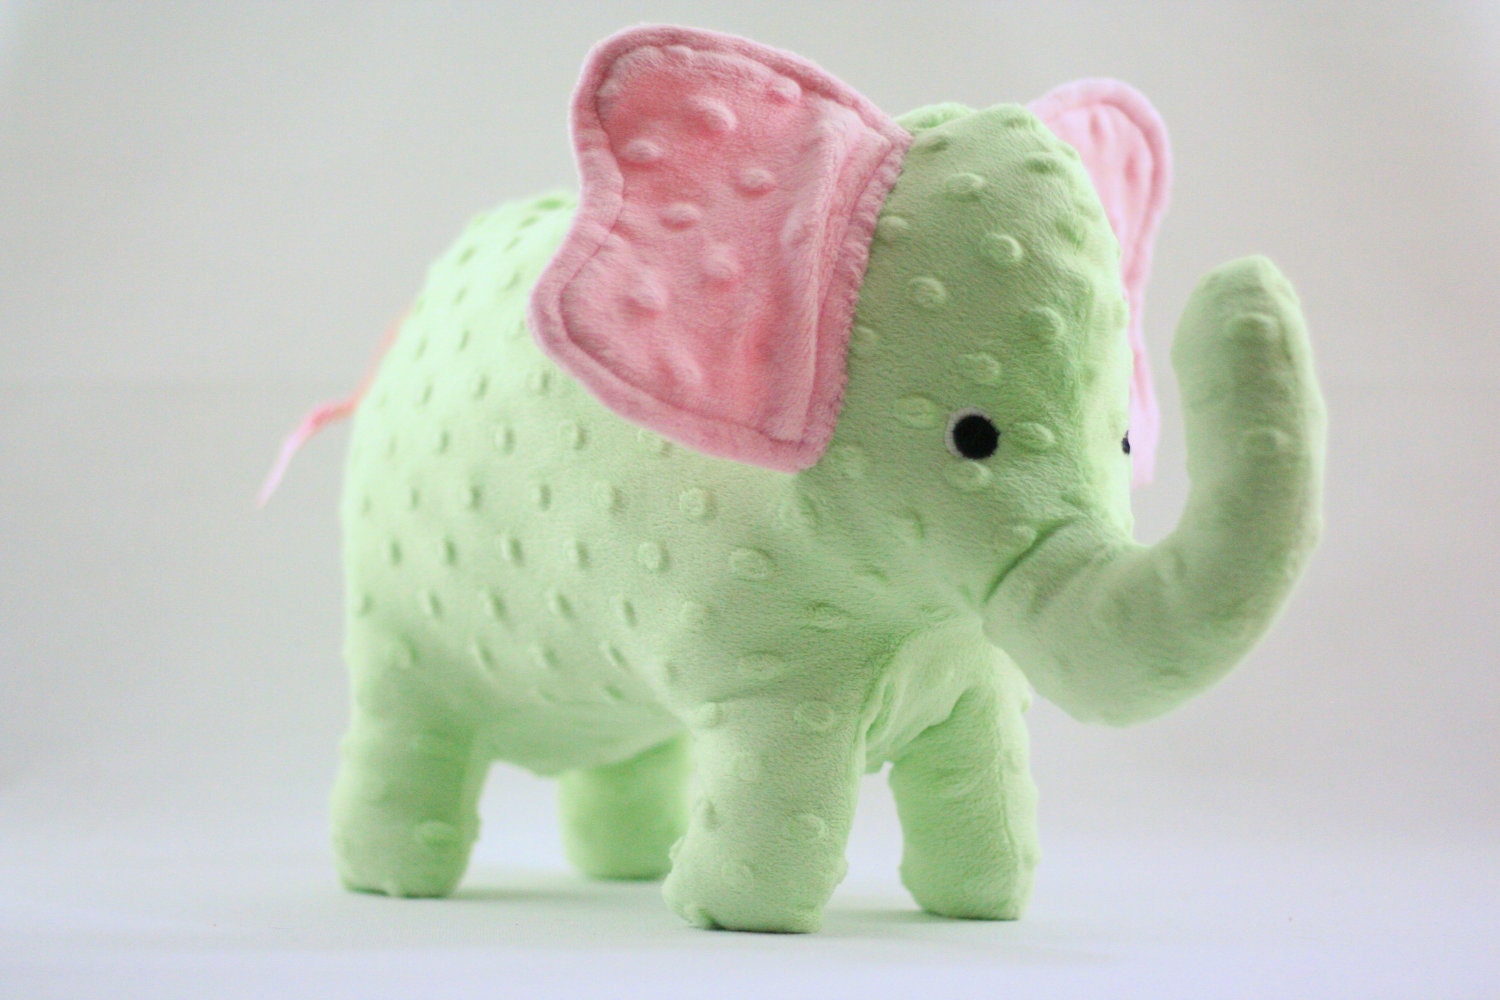 Stuffed Elephant Toy - Pink and Green Minky Plush Elephant